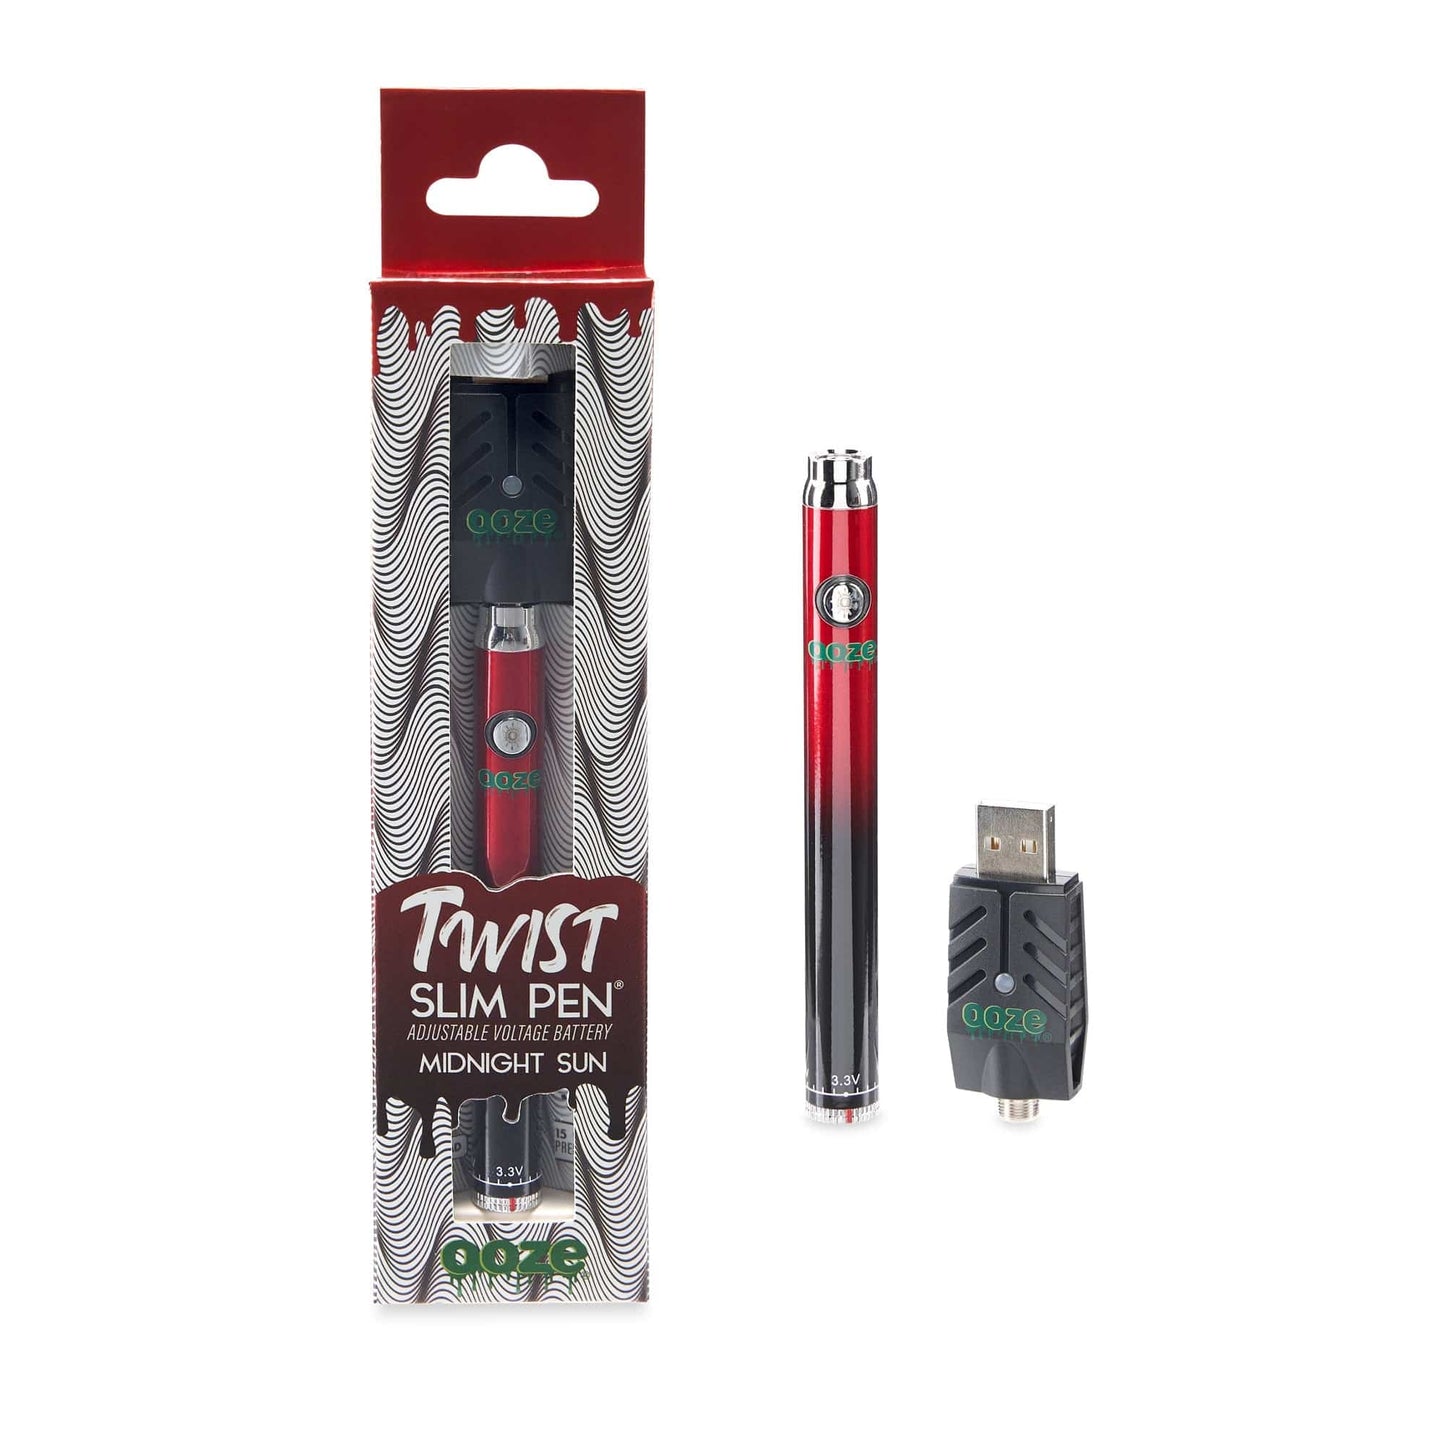 Ooze Batteries and Vapes Ooze Slim Twist 510 Thread 320 mAh CBD Vape Pen Battery + USB Charger